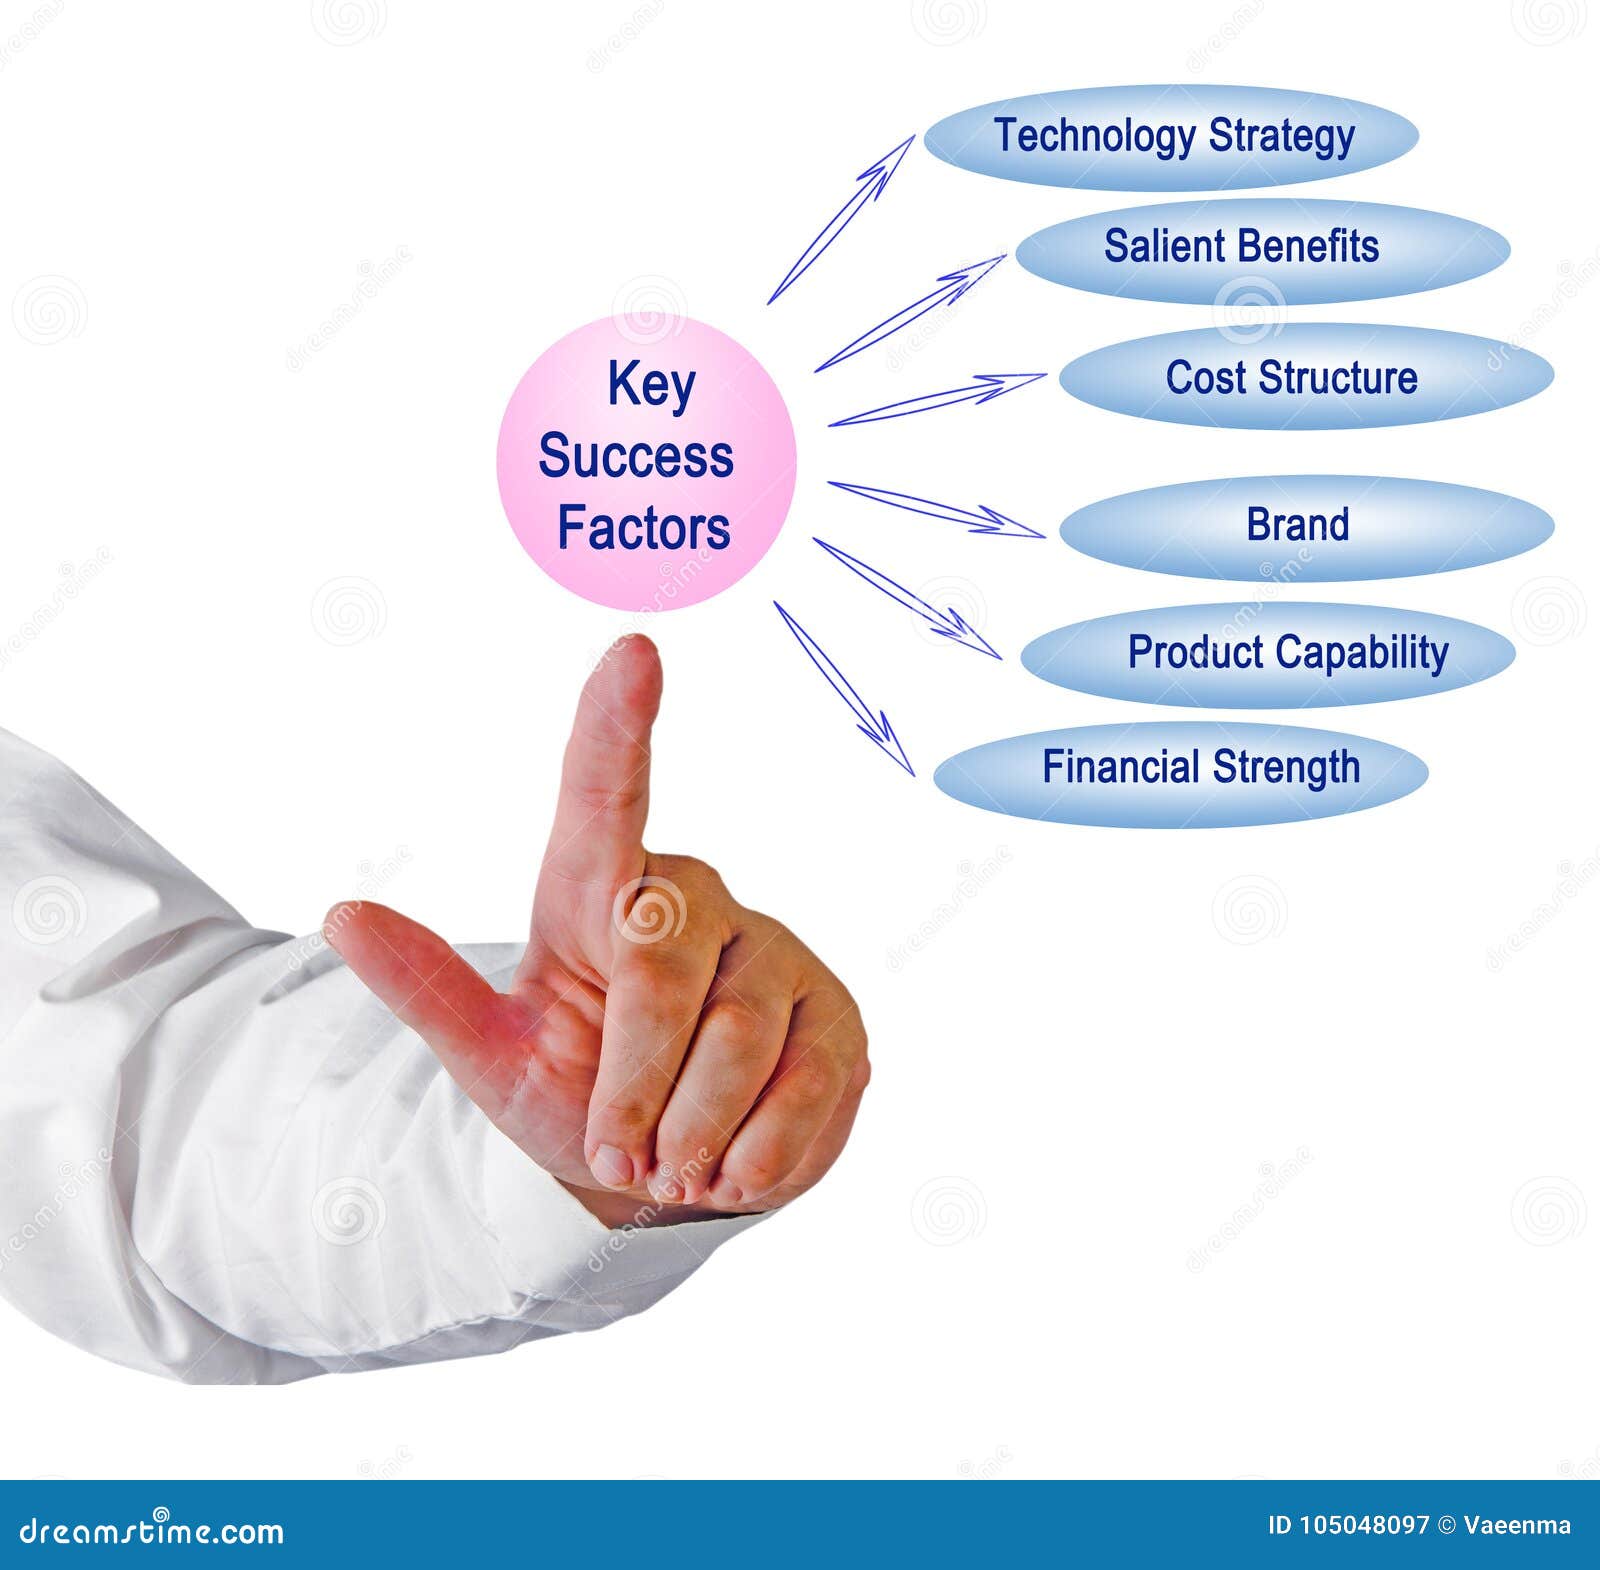 Key Sucess Factors / Your key success factors must encompass all the